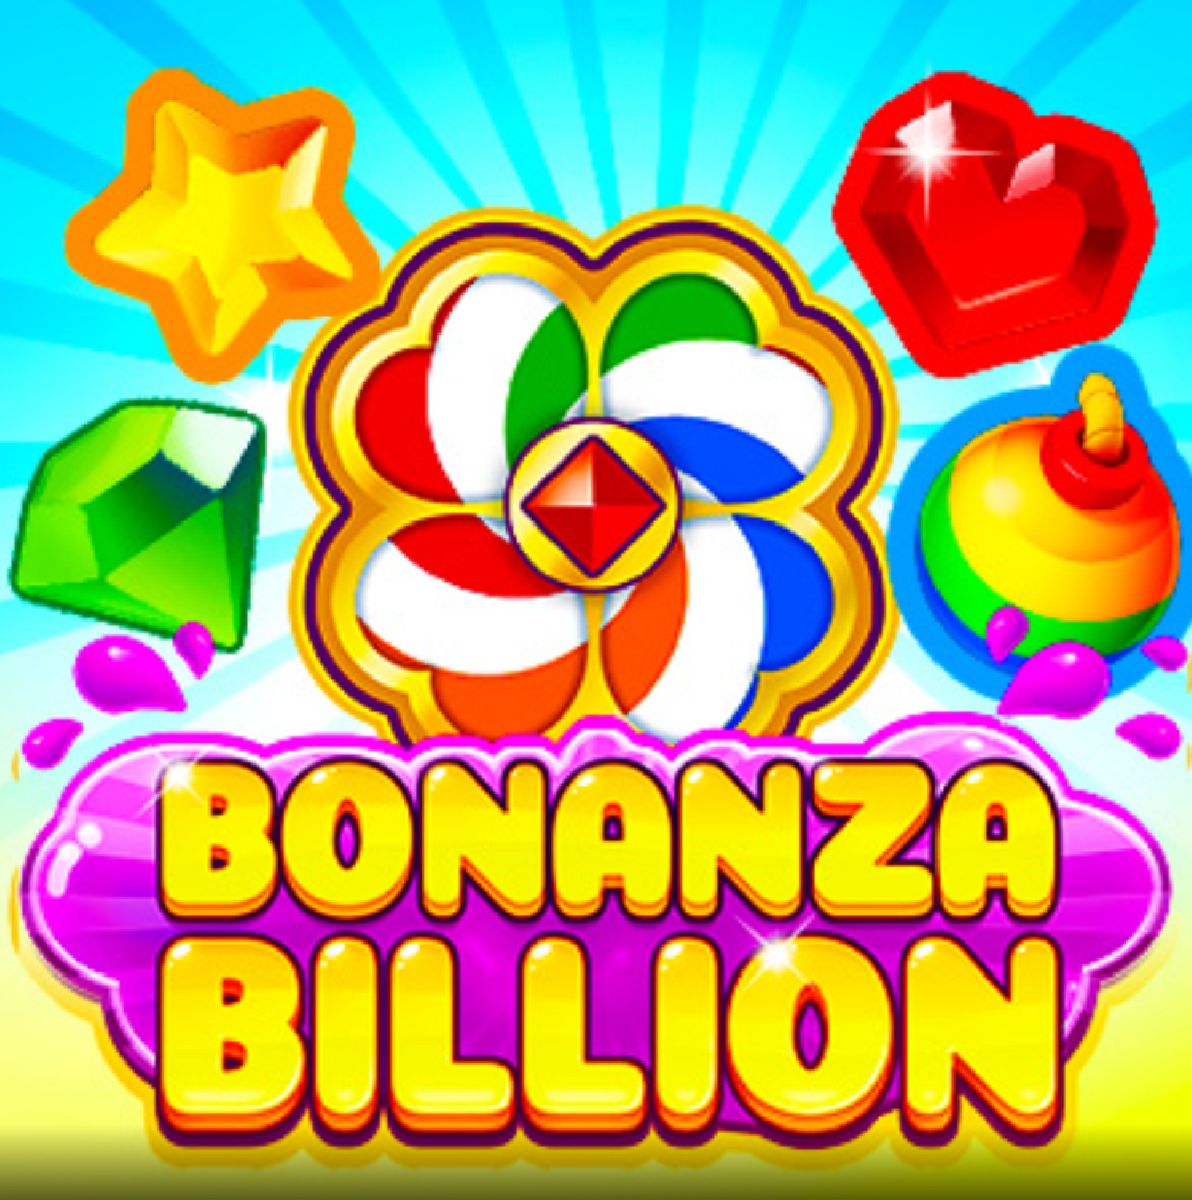 bonanza billion_A